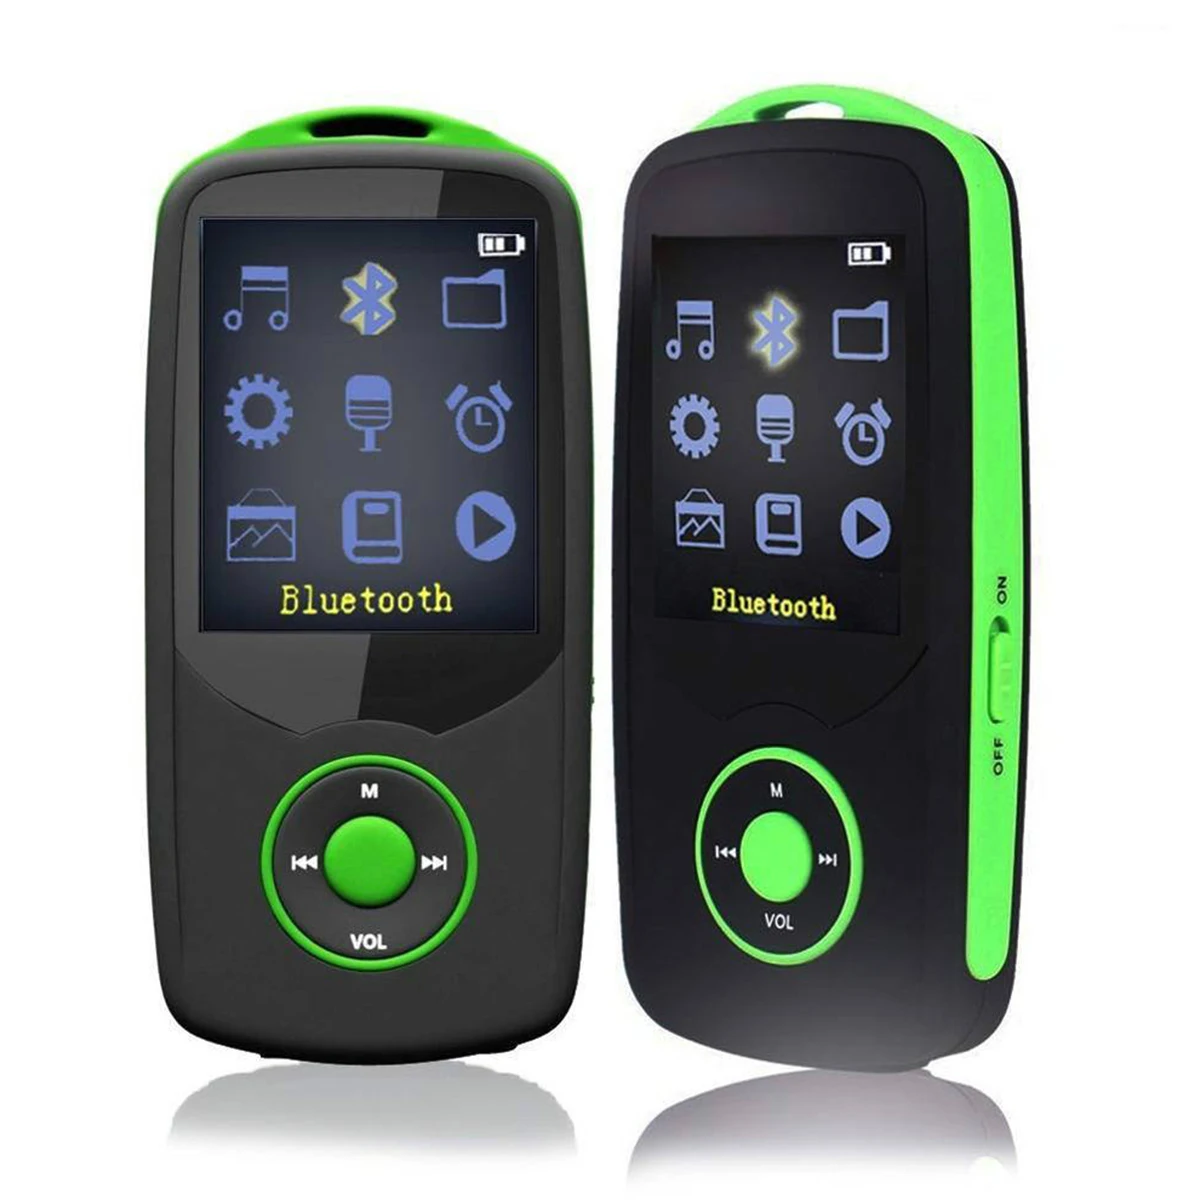 

Original RUIZU X06 Mp3 Player Bluetooth 4GB/ 8GB 1.8" LCD Screen Lossless Voice Recorder FM Hifi Mini Sports MP3 Music Player